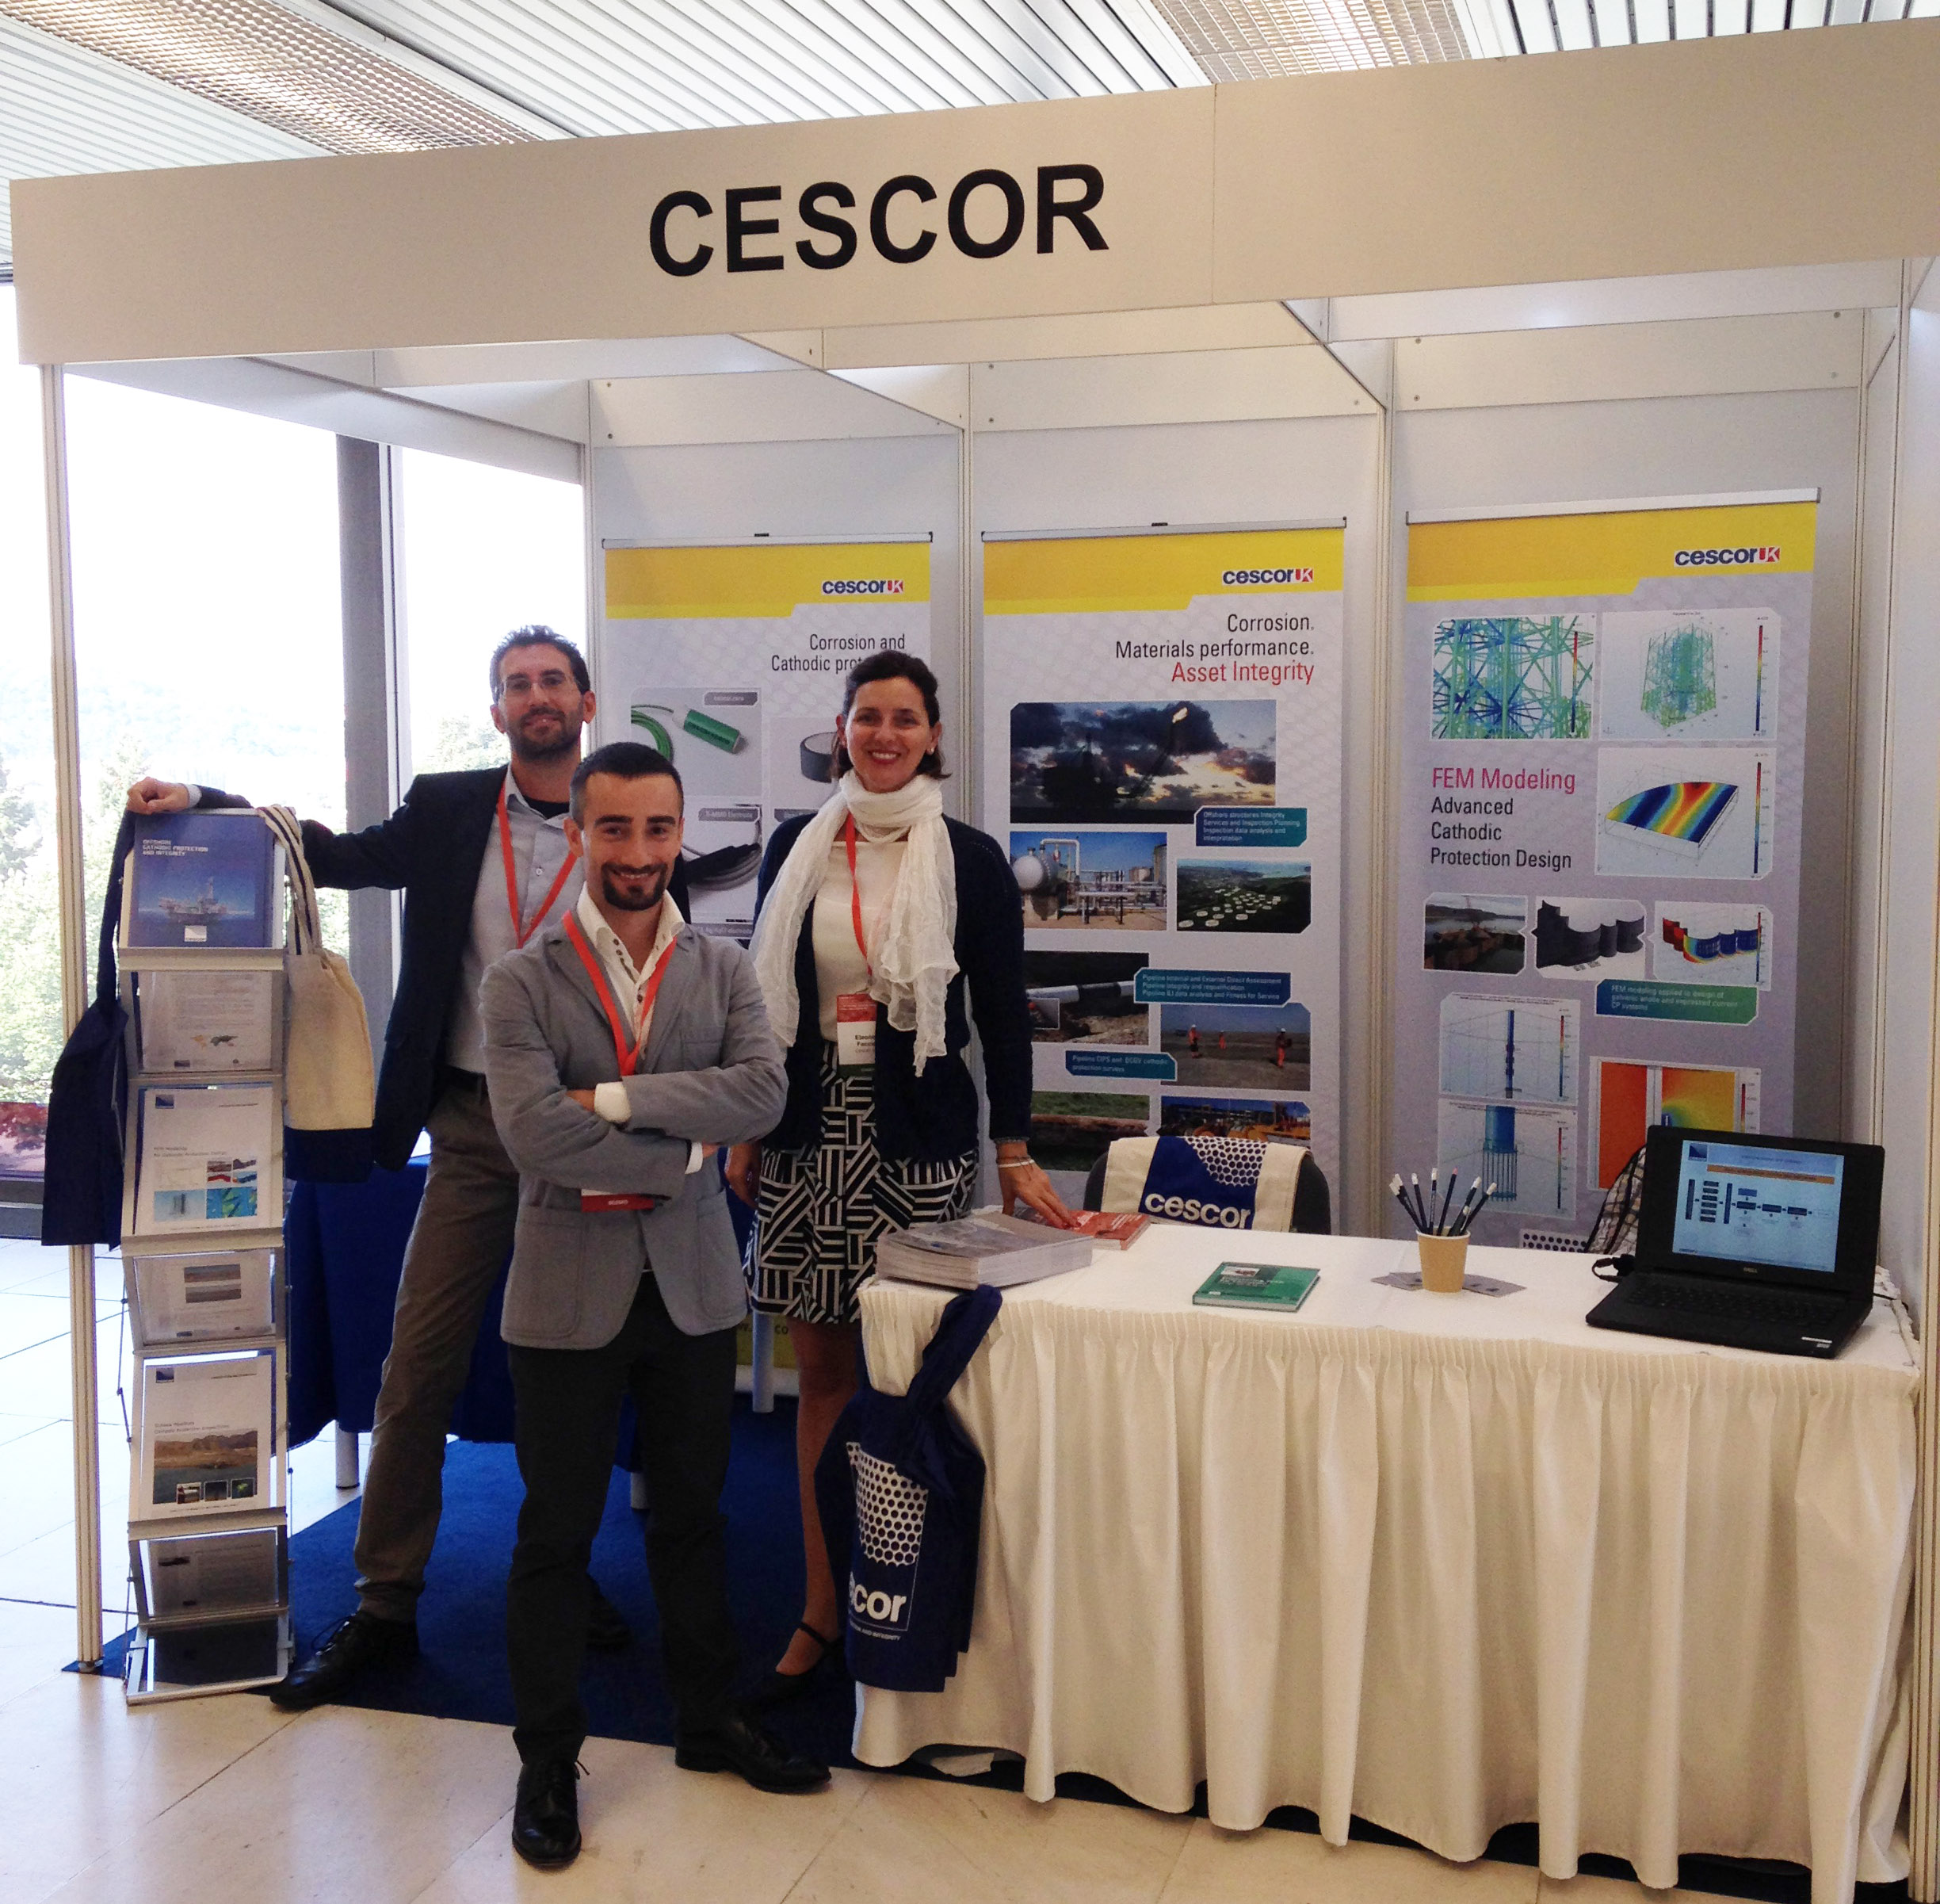 Cescor's exhibition stand at Eurocorr 2017